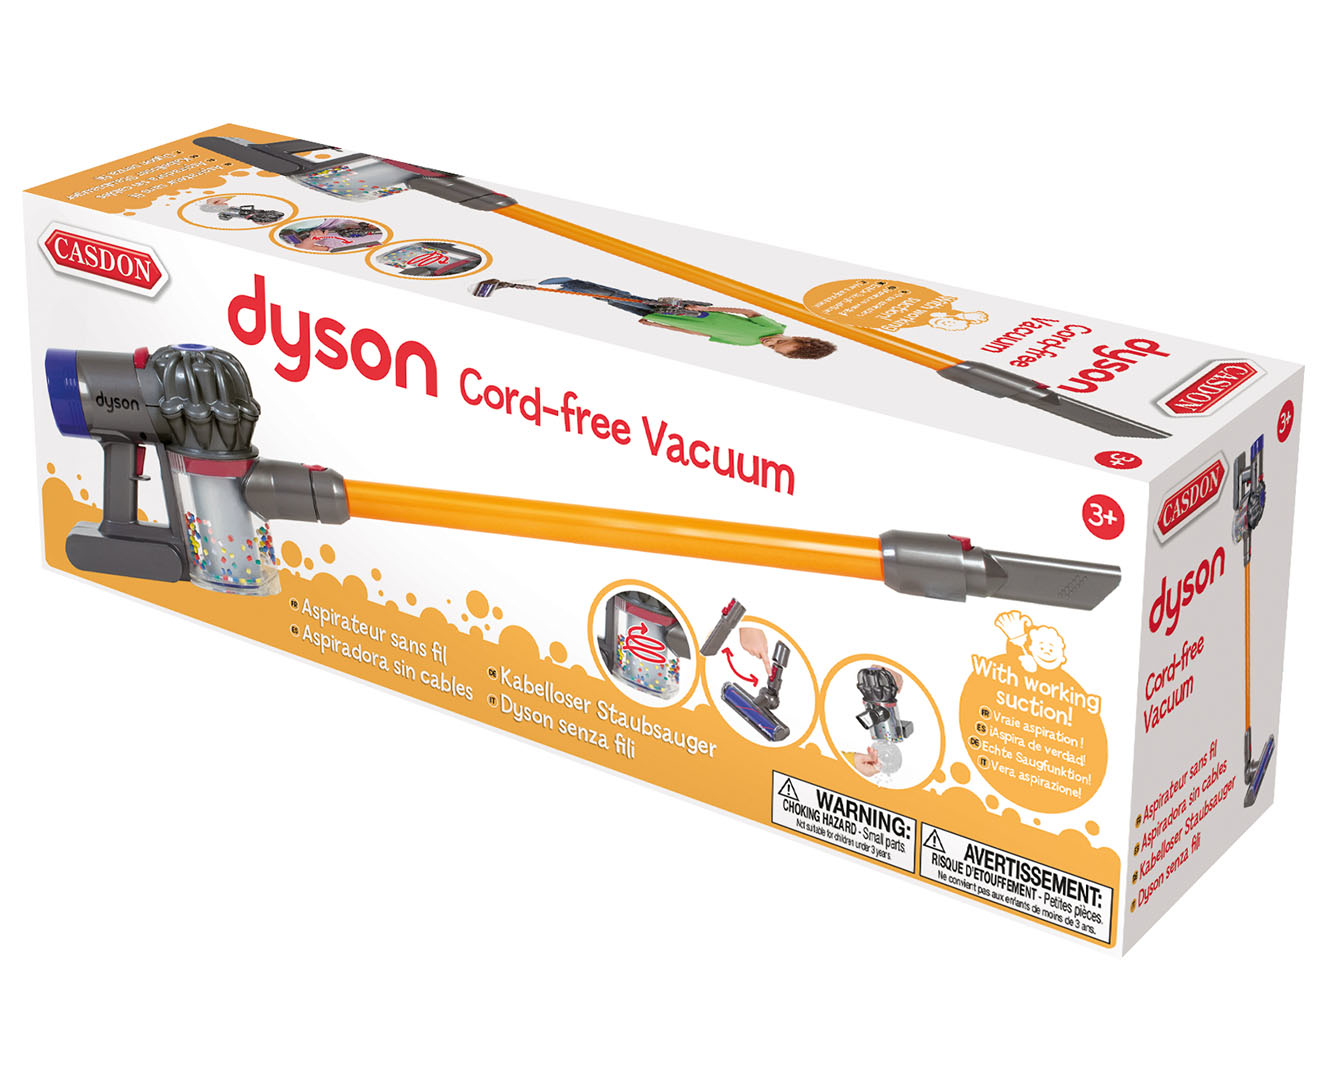 the casdon dyson toy cordless vacuum